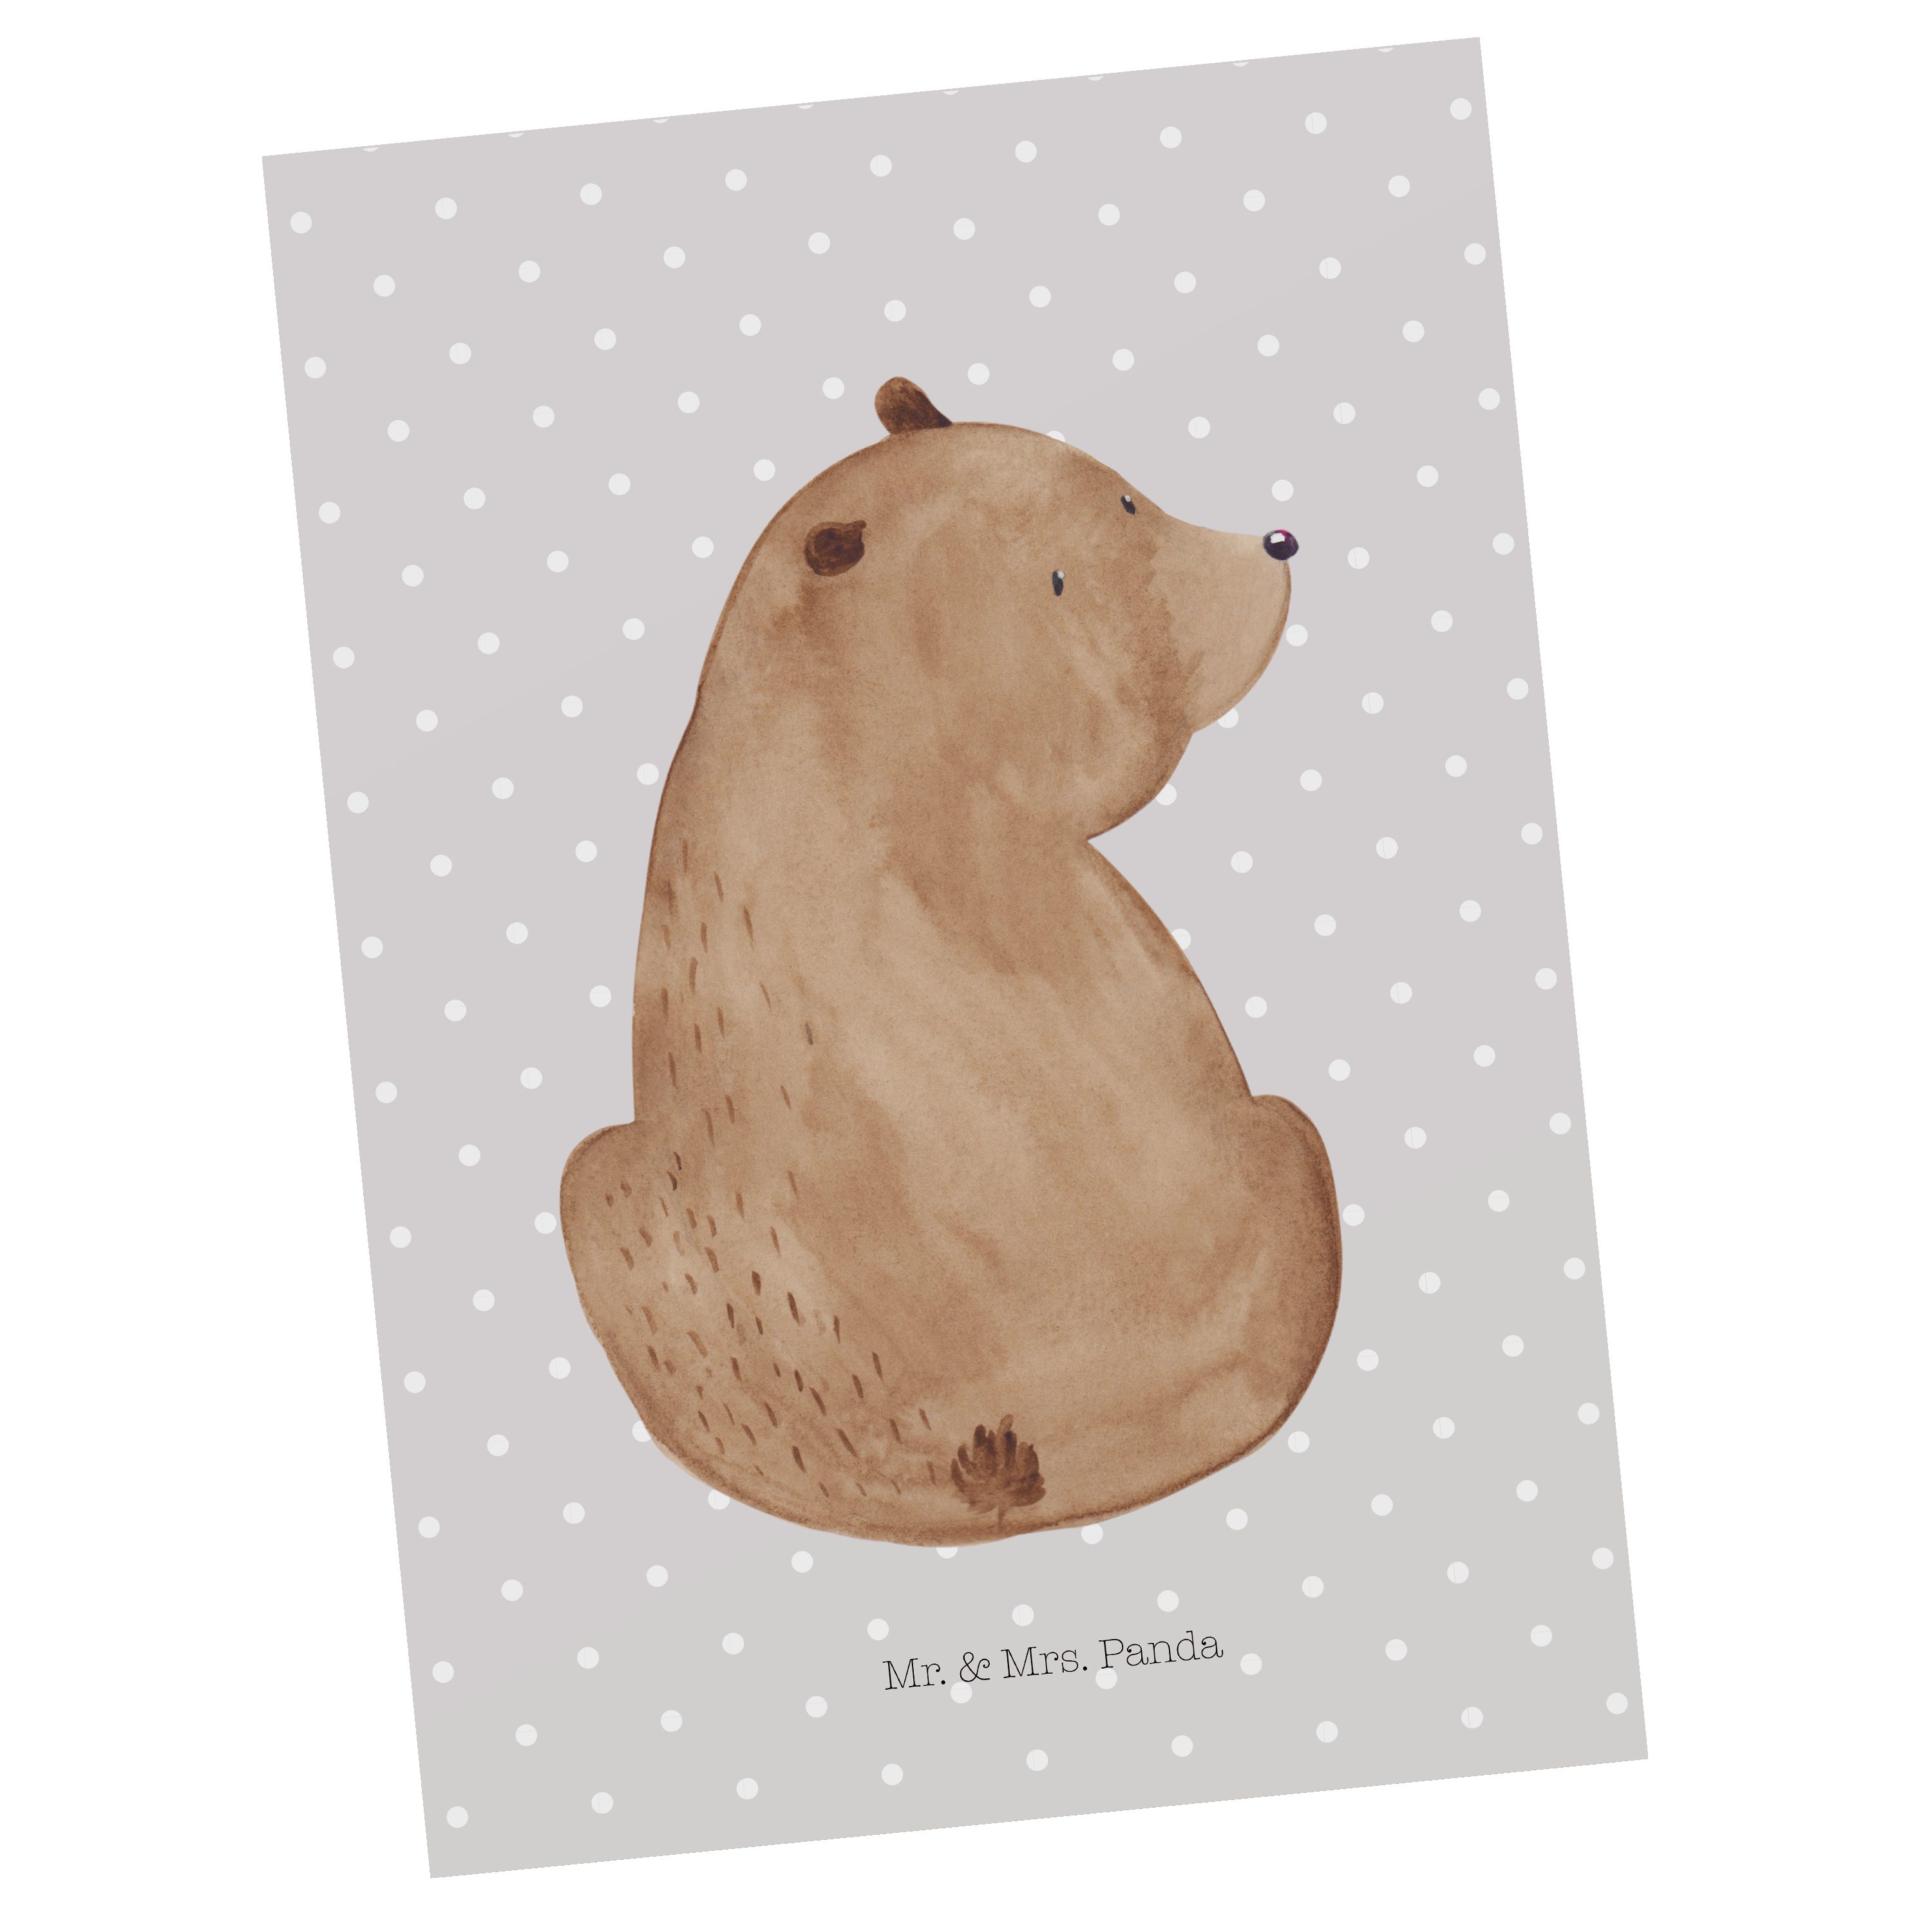 Mr. & Mrs. Panda Postkarte Bär Schulterblick - Grau Pastell - Geschenk, Geschenkkarte, Einladung